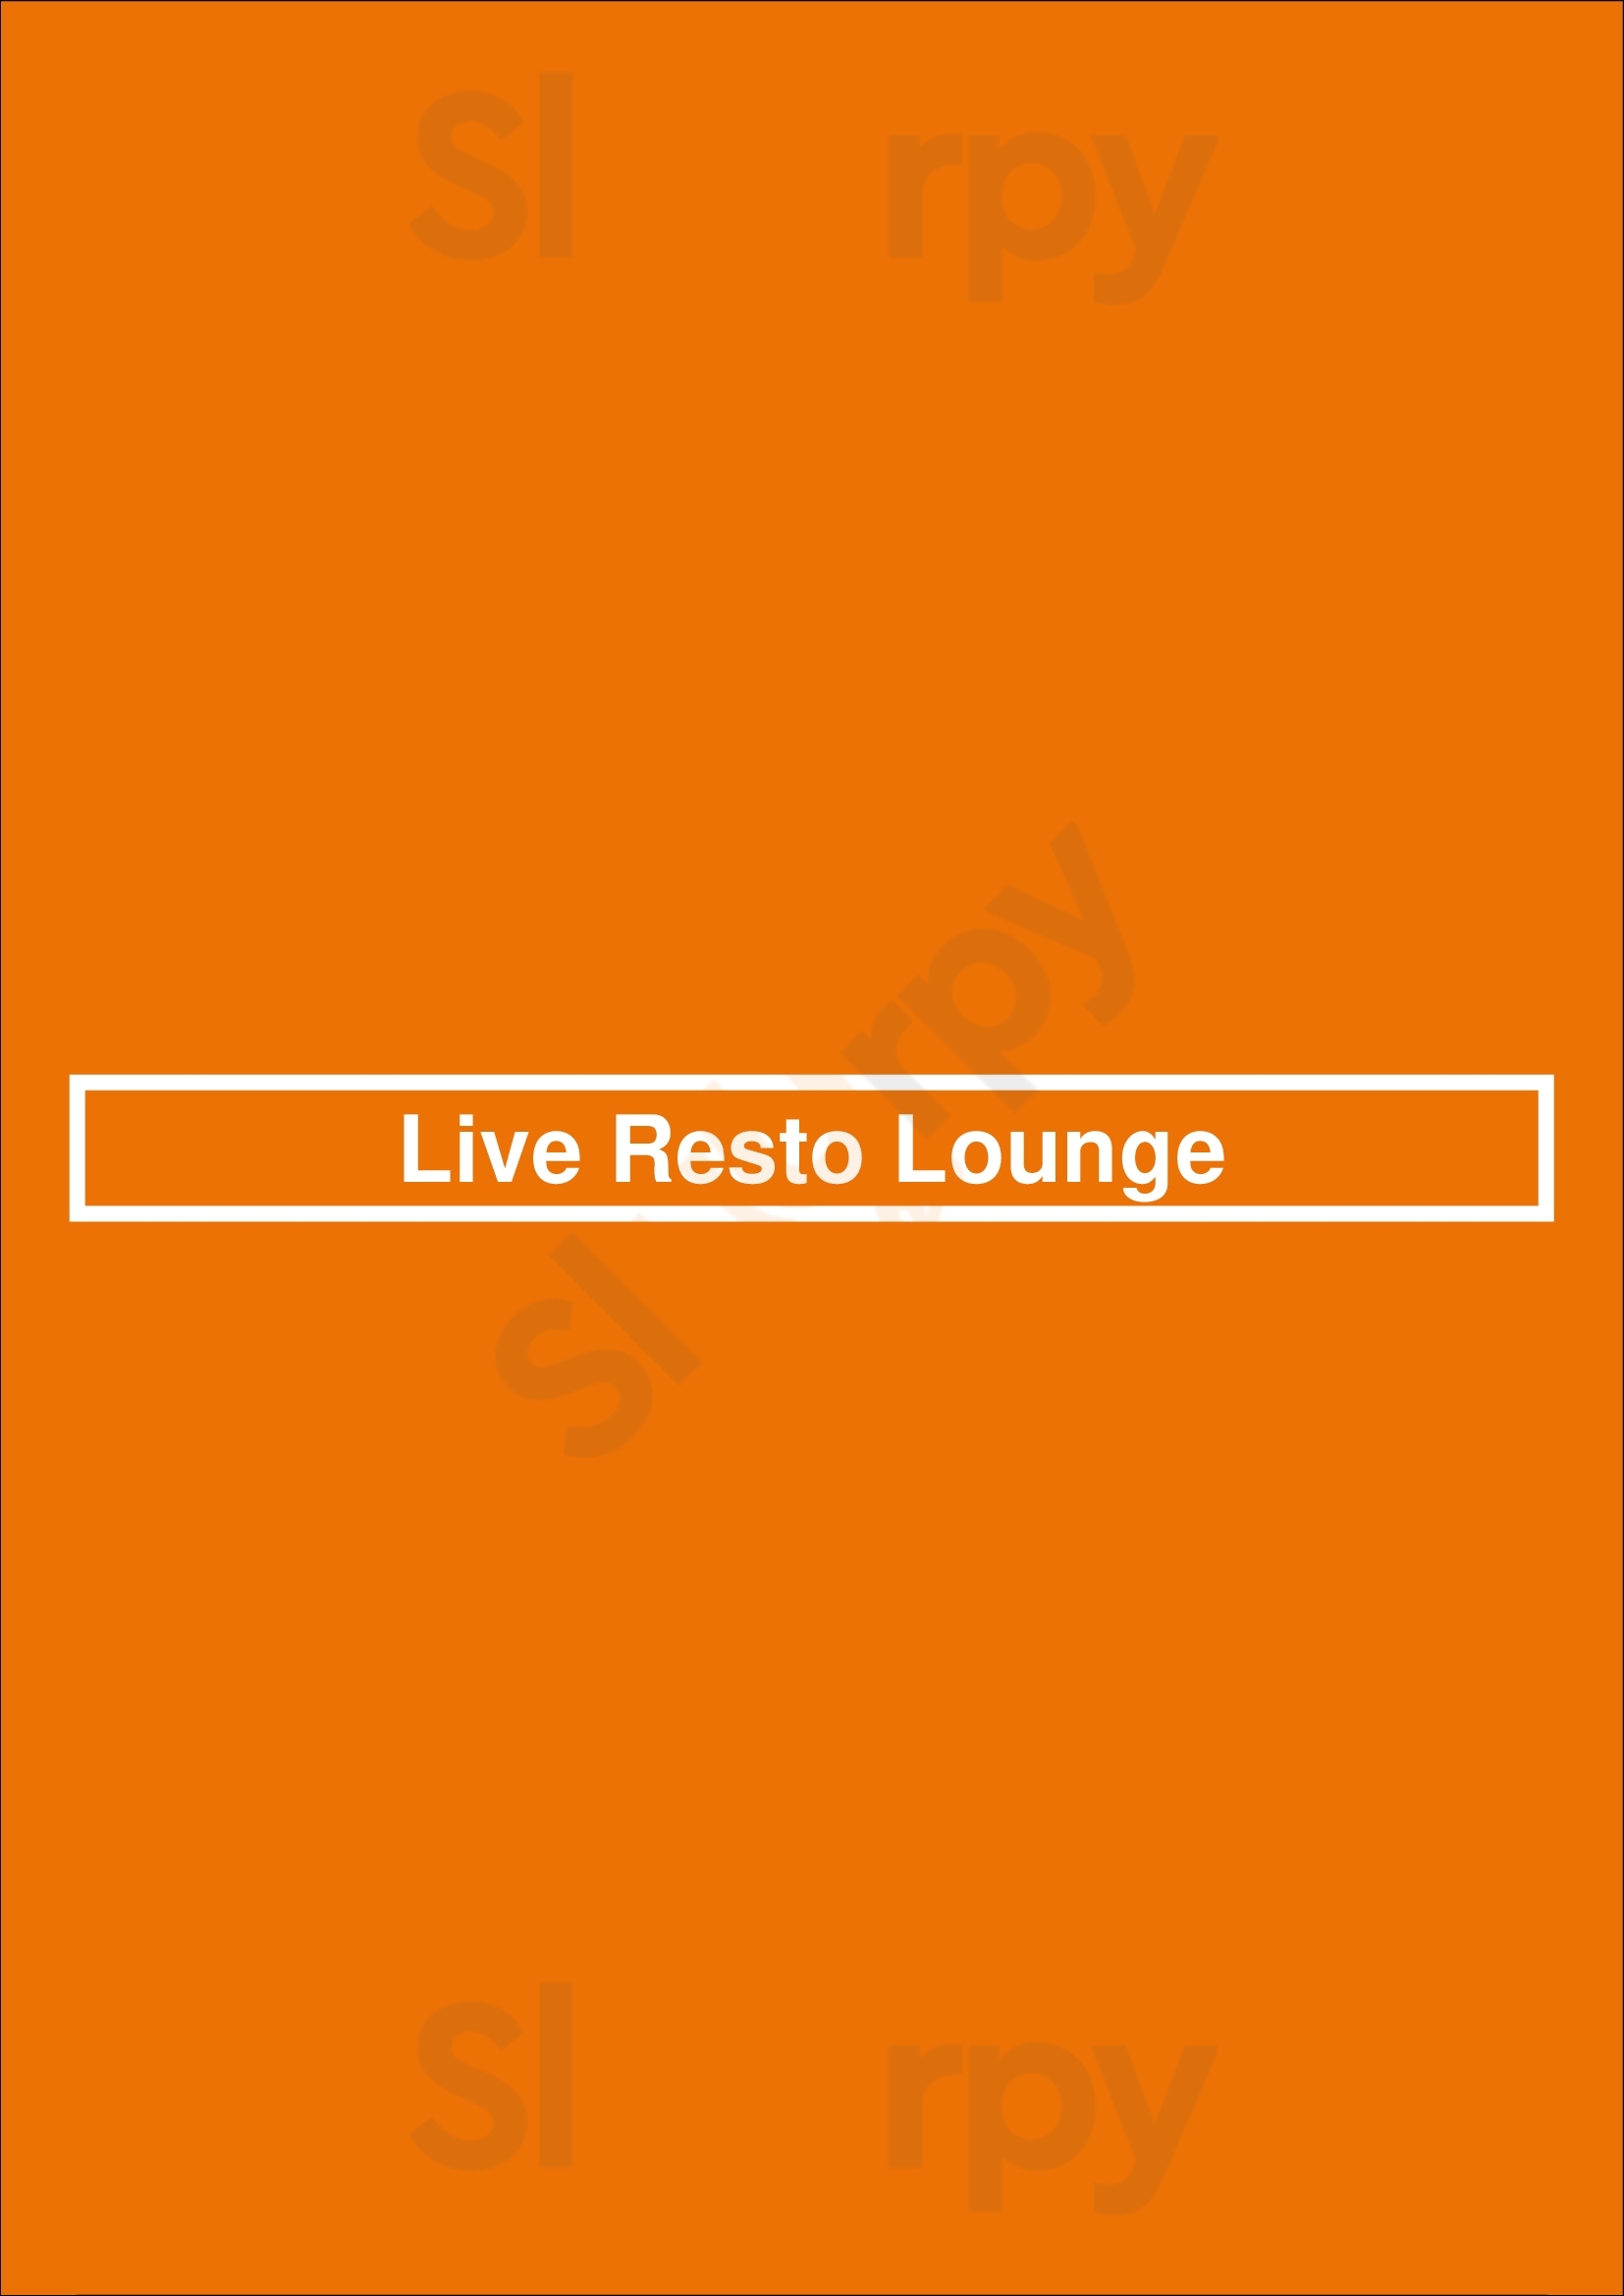 Live Resto Lounge Ajax Menu - 1